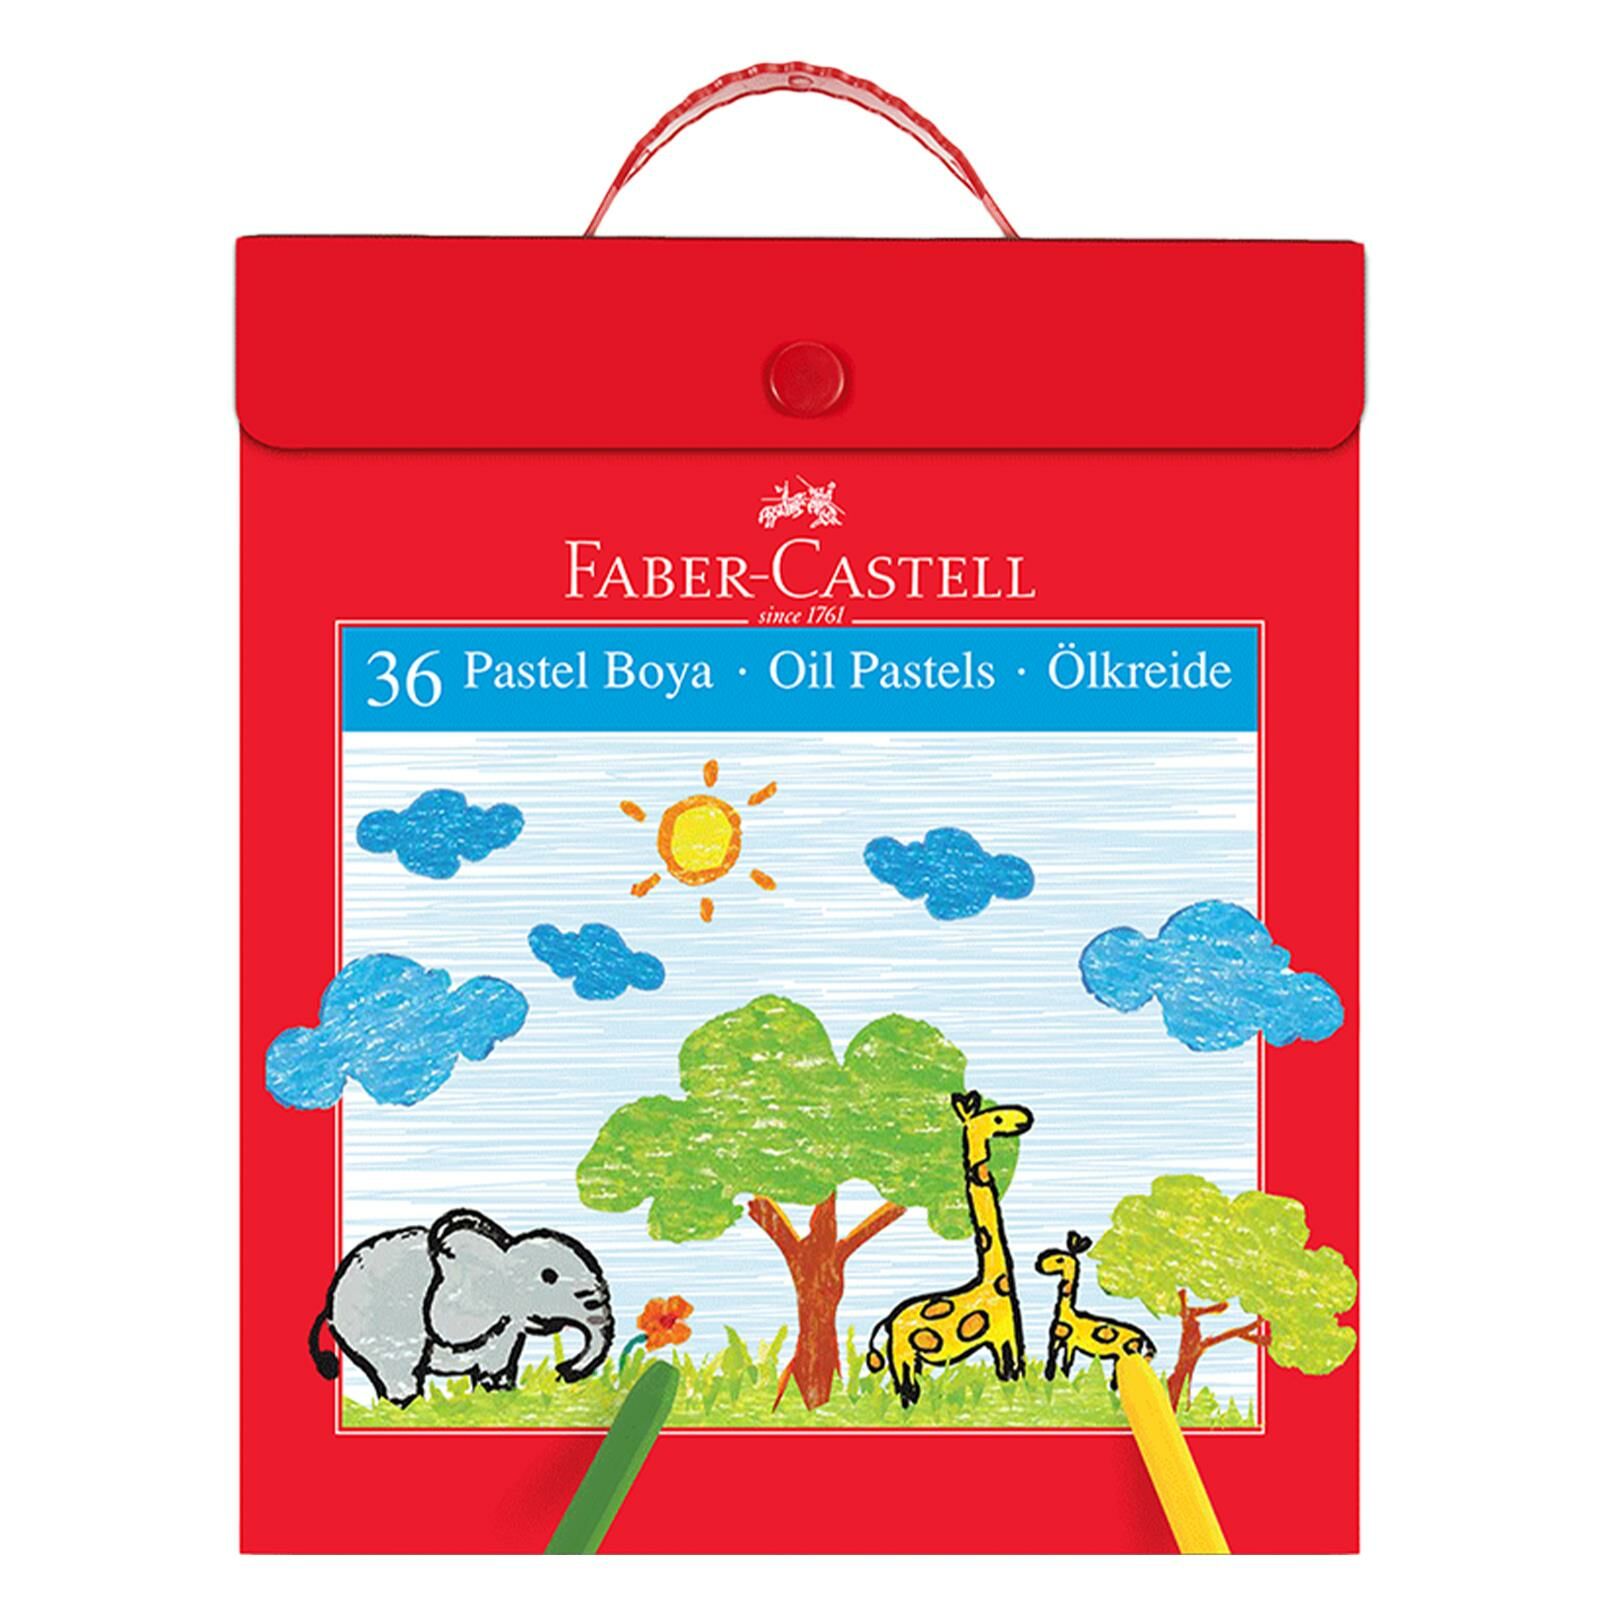 Faber-Castell Pastel Boya 36 lı Set